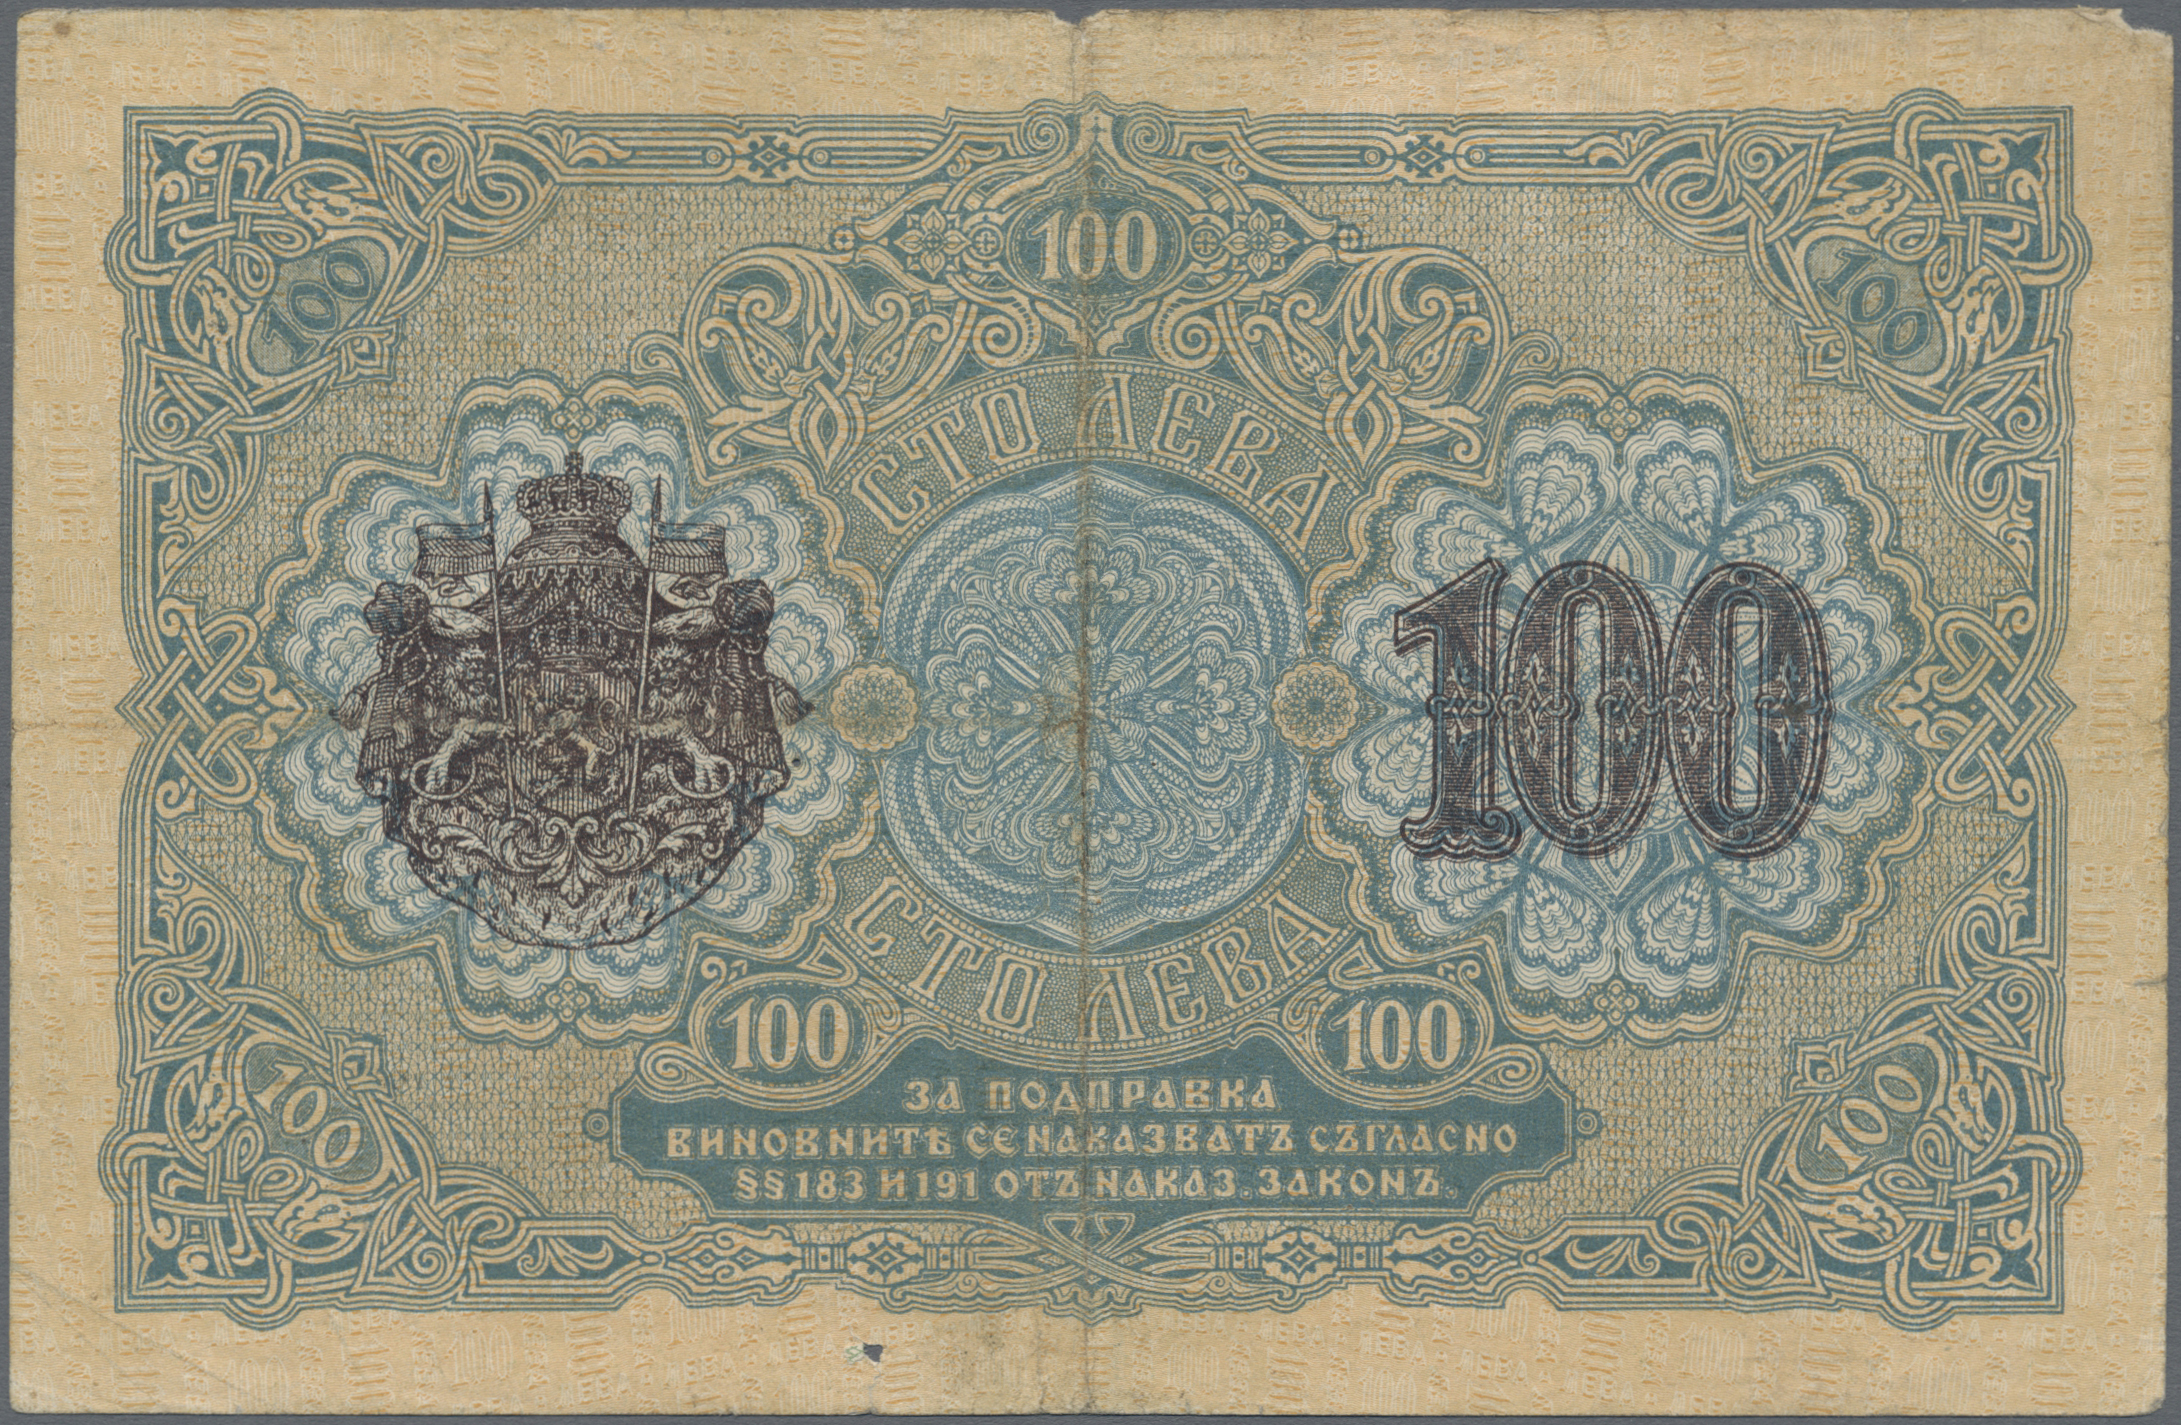 Lot 00222 - Bulgaria / Bulgarien | Banknoten  -  Auktionshaus Christoph Gärtner GmbH & Co. KG 56th AUCTION - Day 1